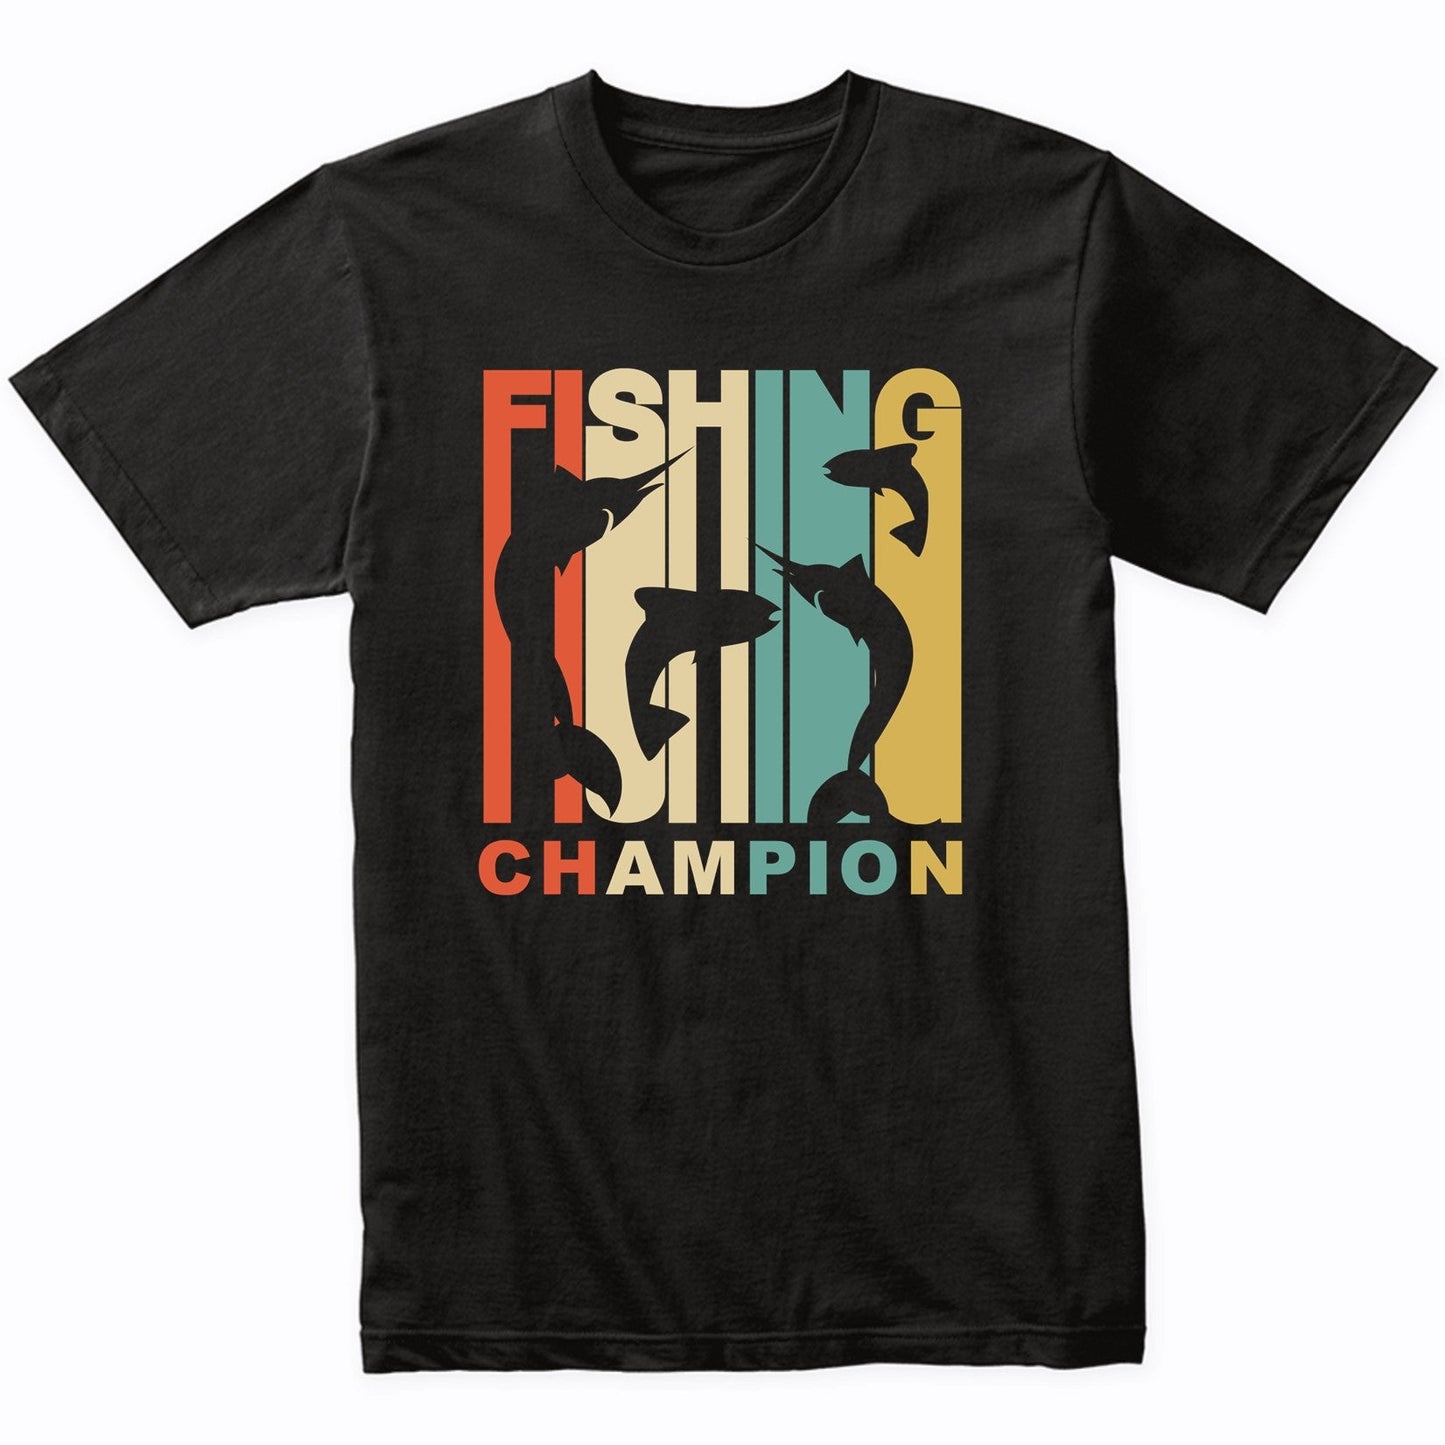 Vintage 1970's Style Fishing Champion Retro T-Shirt